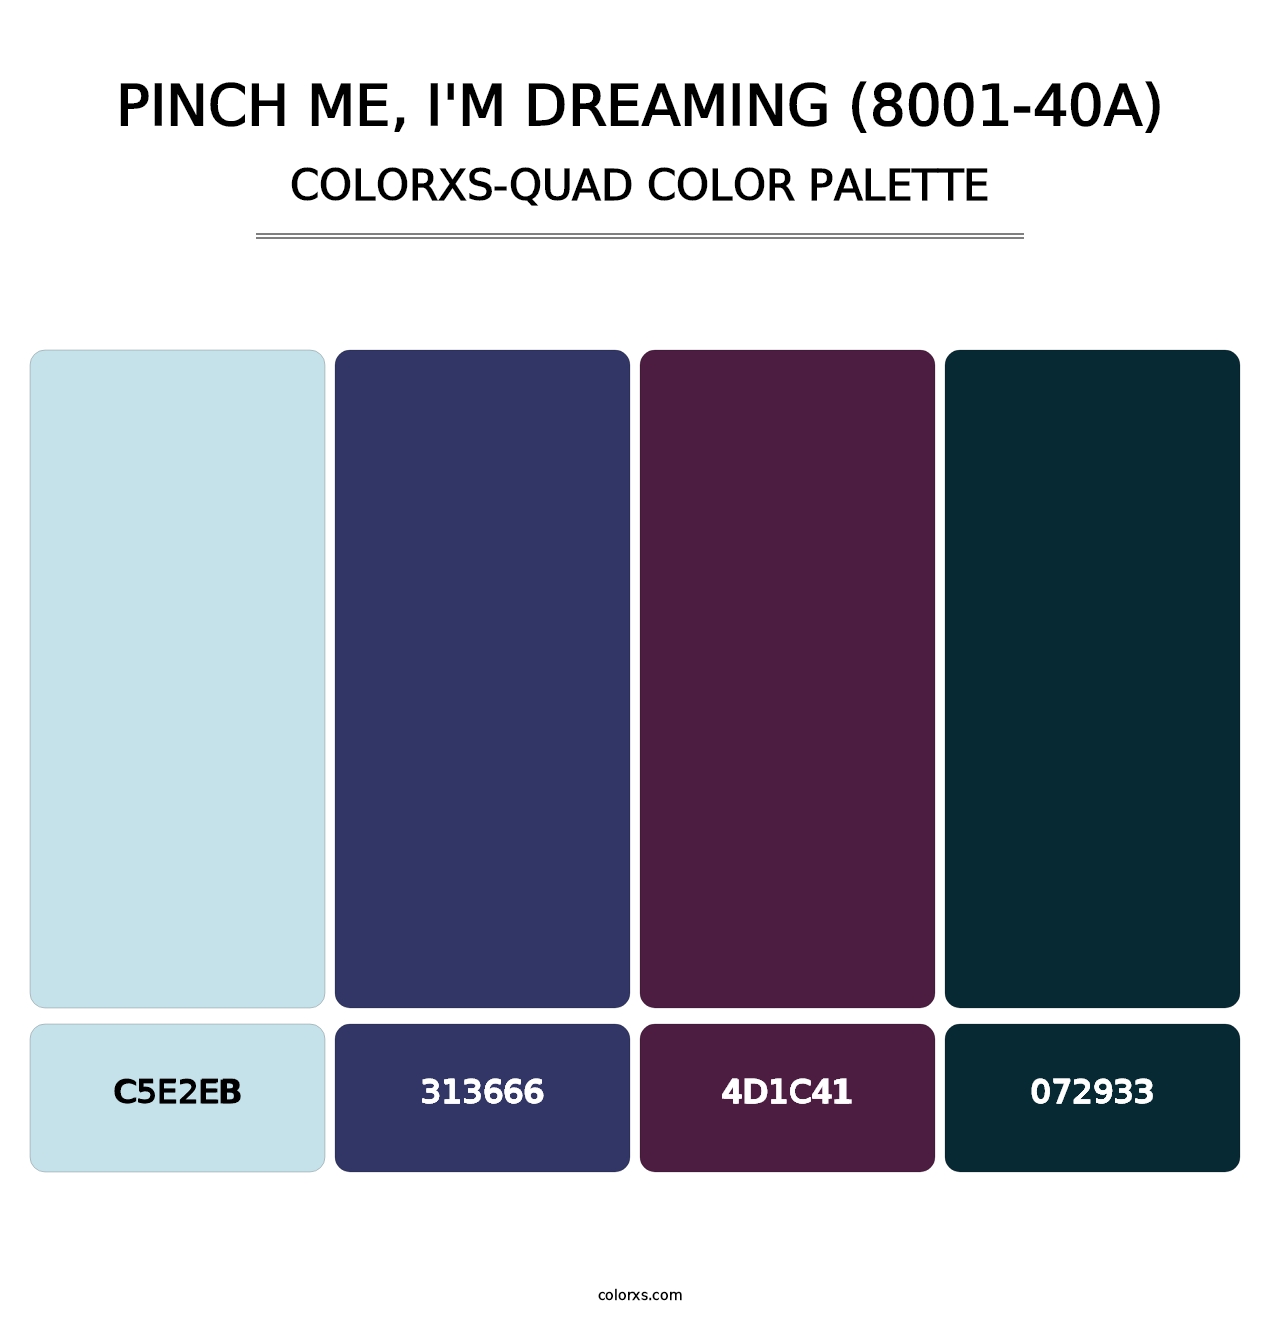 Pinch Me, I'm Dreaming (8001-40A) - Colorxs Quad Palette